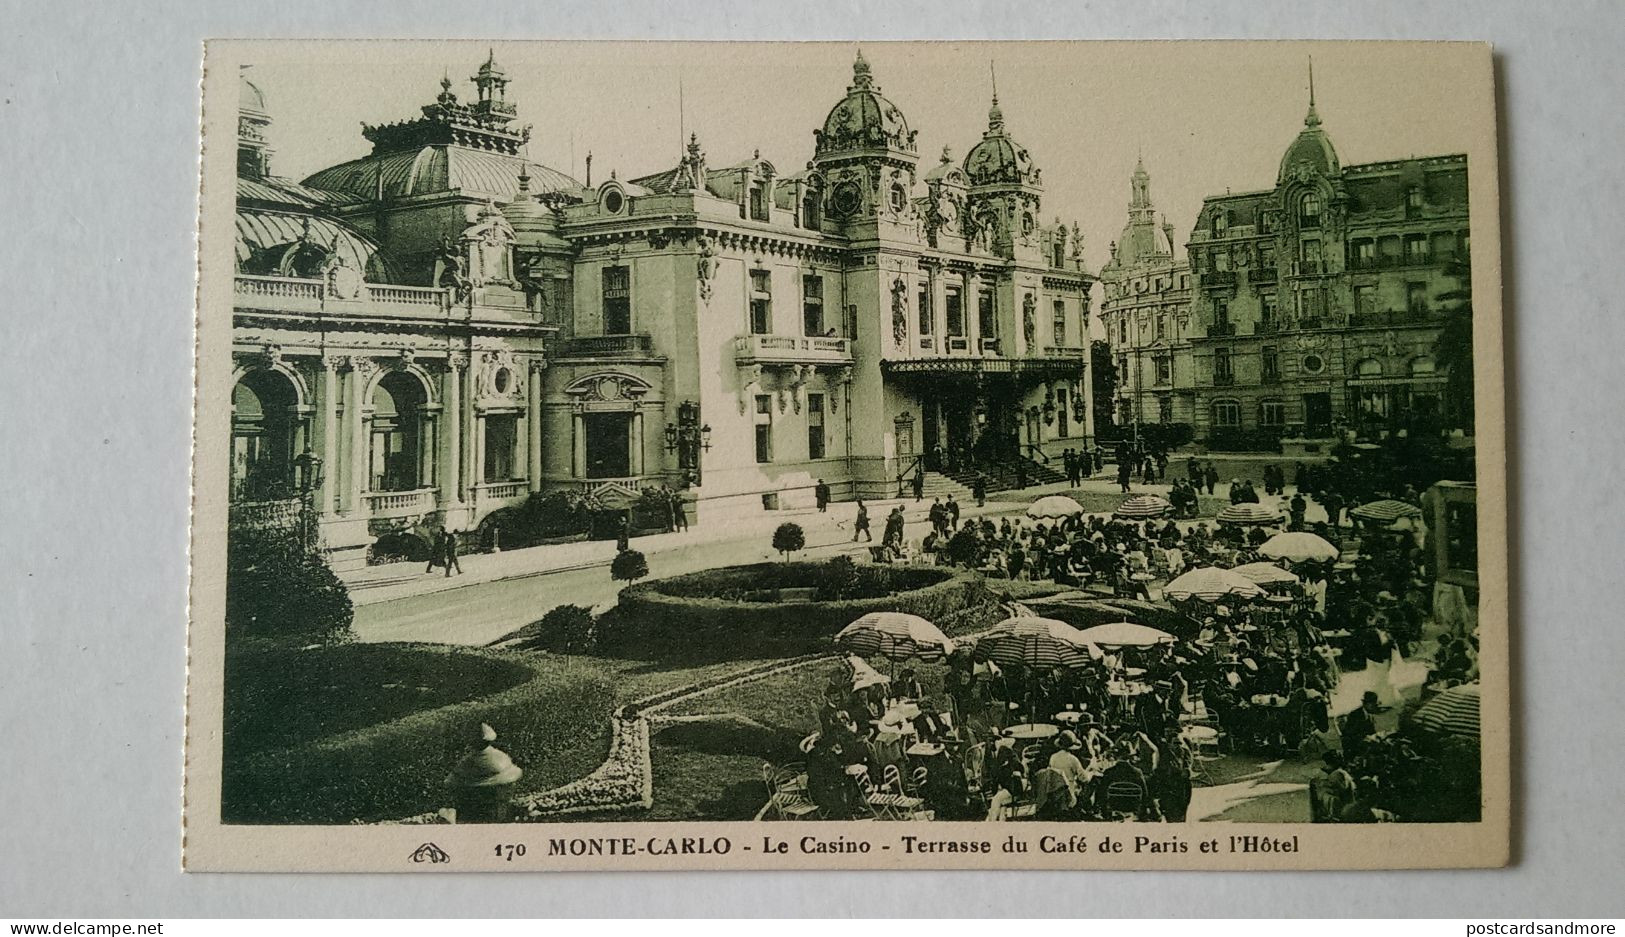 Monaco Monte Carlo Lot of 20 unused postcards Cie. Alsacienne des Arts Photomécaniques Strasbourg ca. 1925